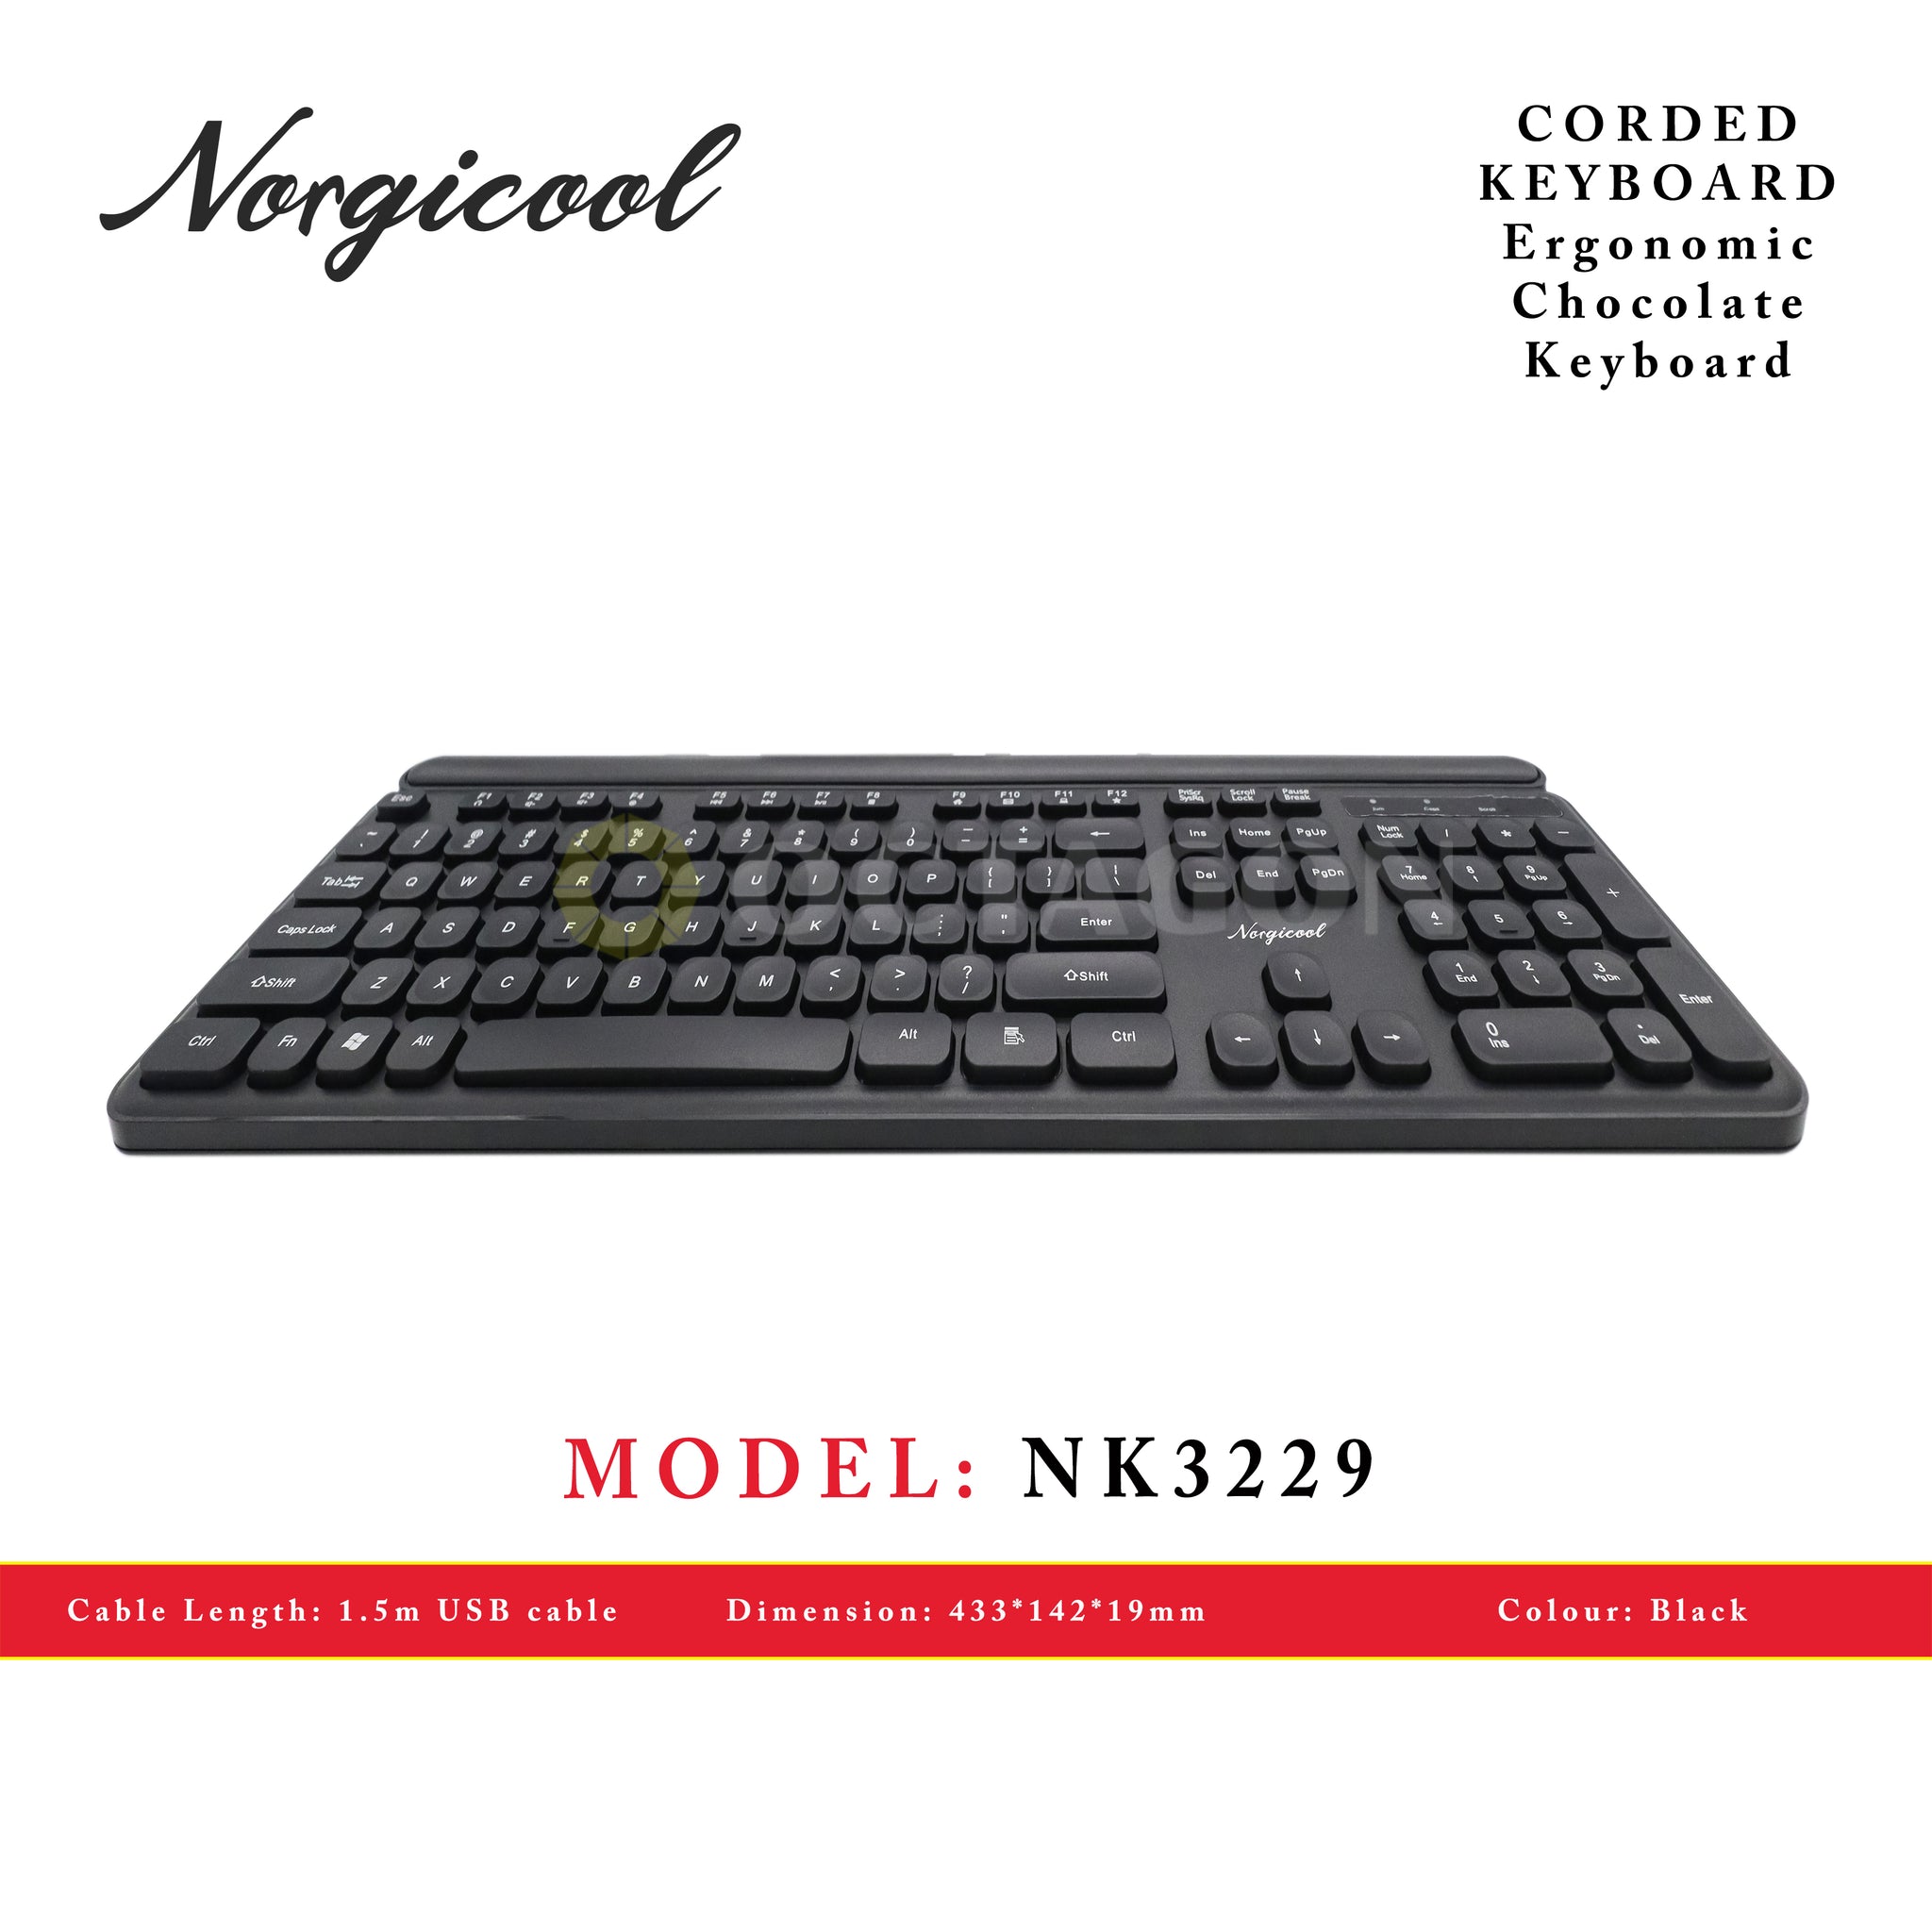 NORGICOOL NK3229 USB KEYBOARD ERGONOMIC CHOCOLATE STYLE